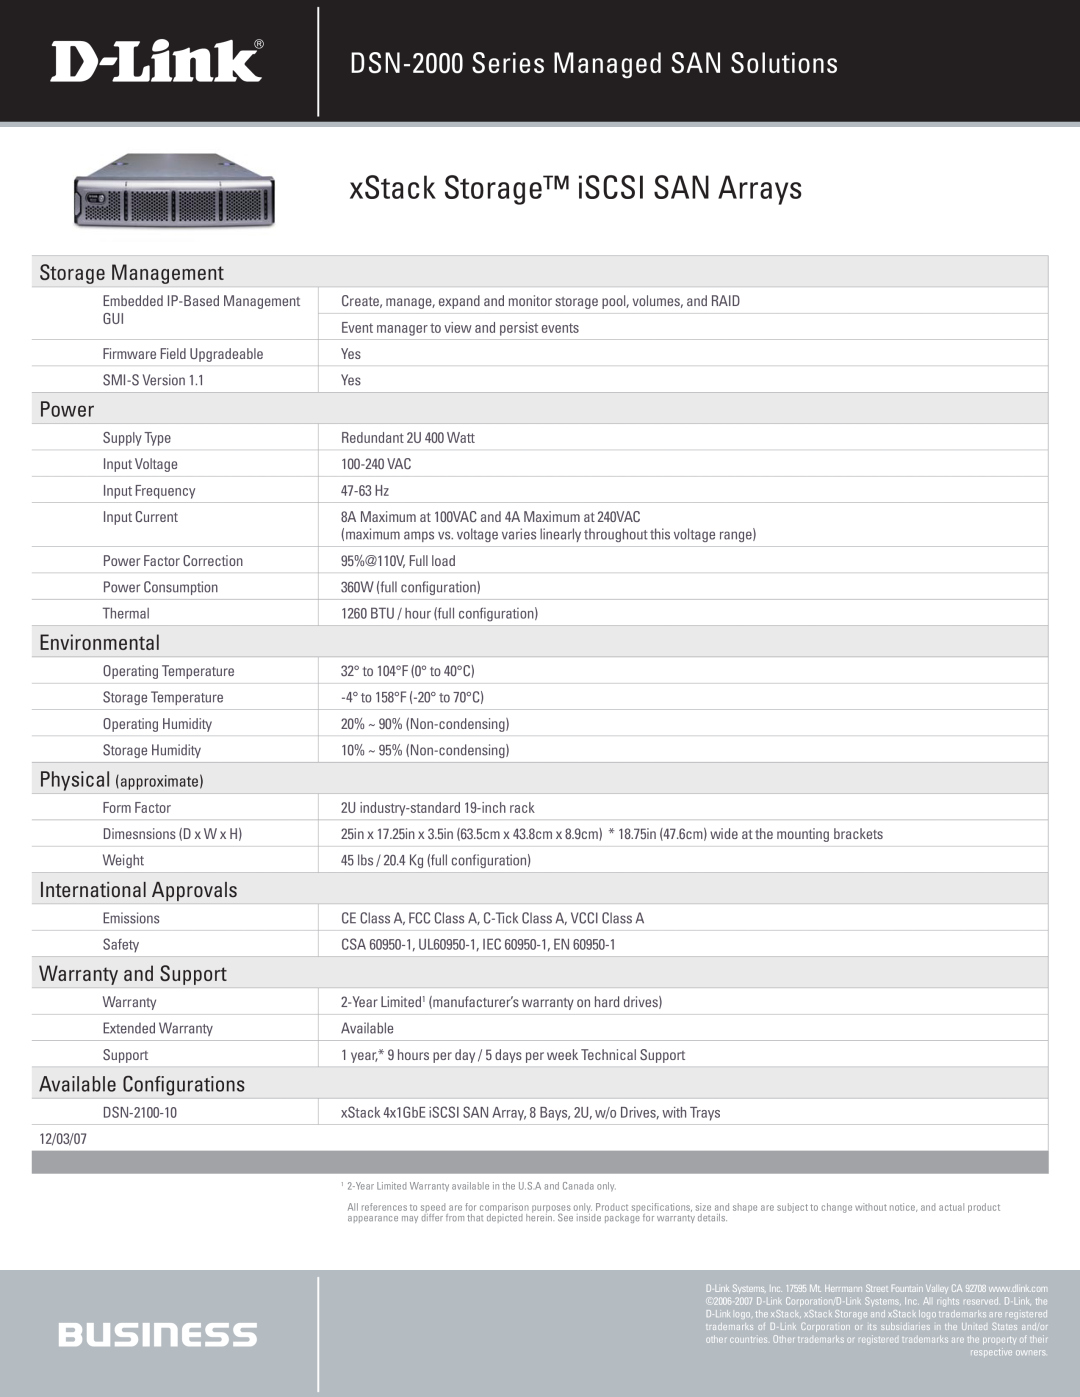 D-Link xStack Storage iSCSI SAN Arrays, DSN-2000 Series Managed SAN Solutions, Storage Management, Power, Environmental 